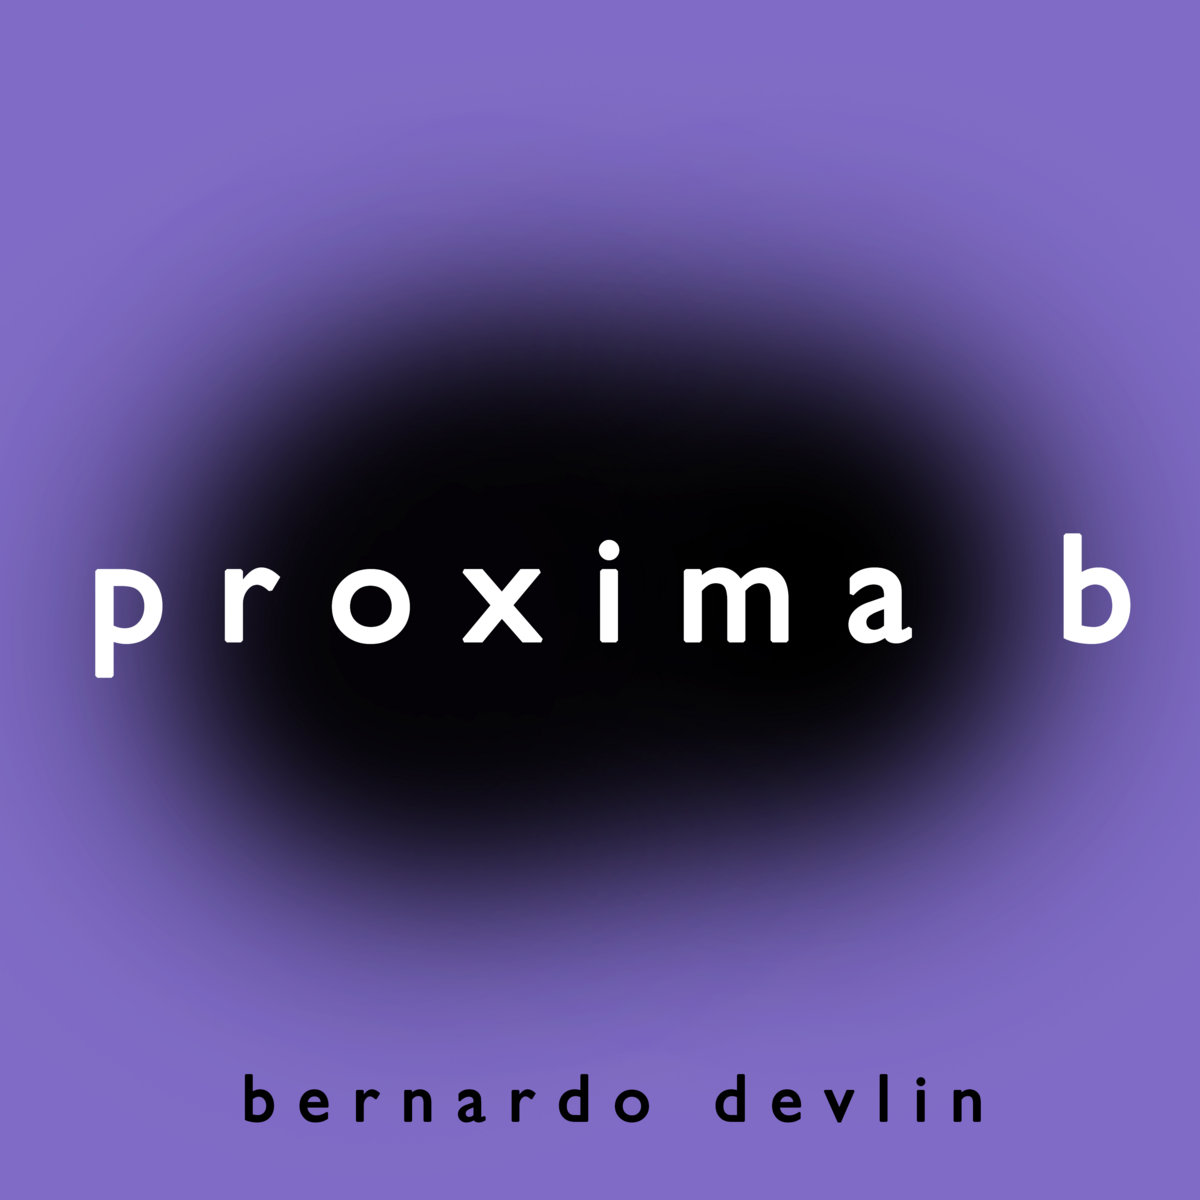 proxima b